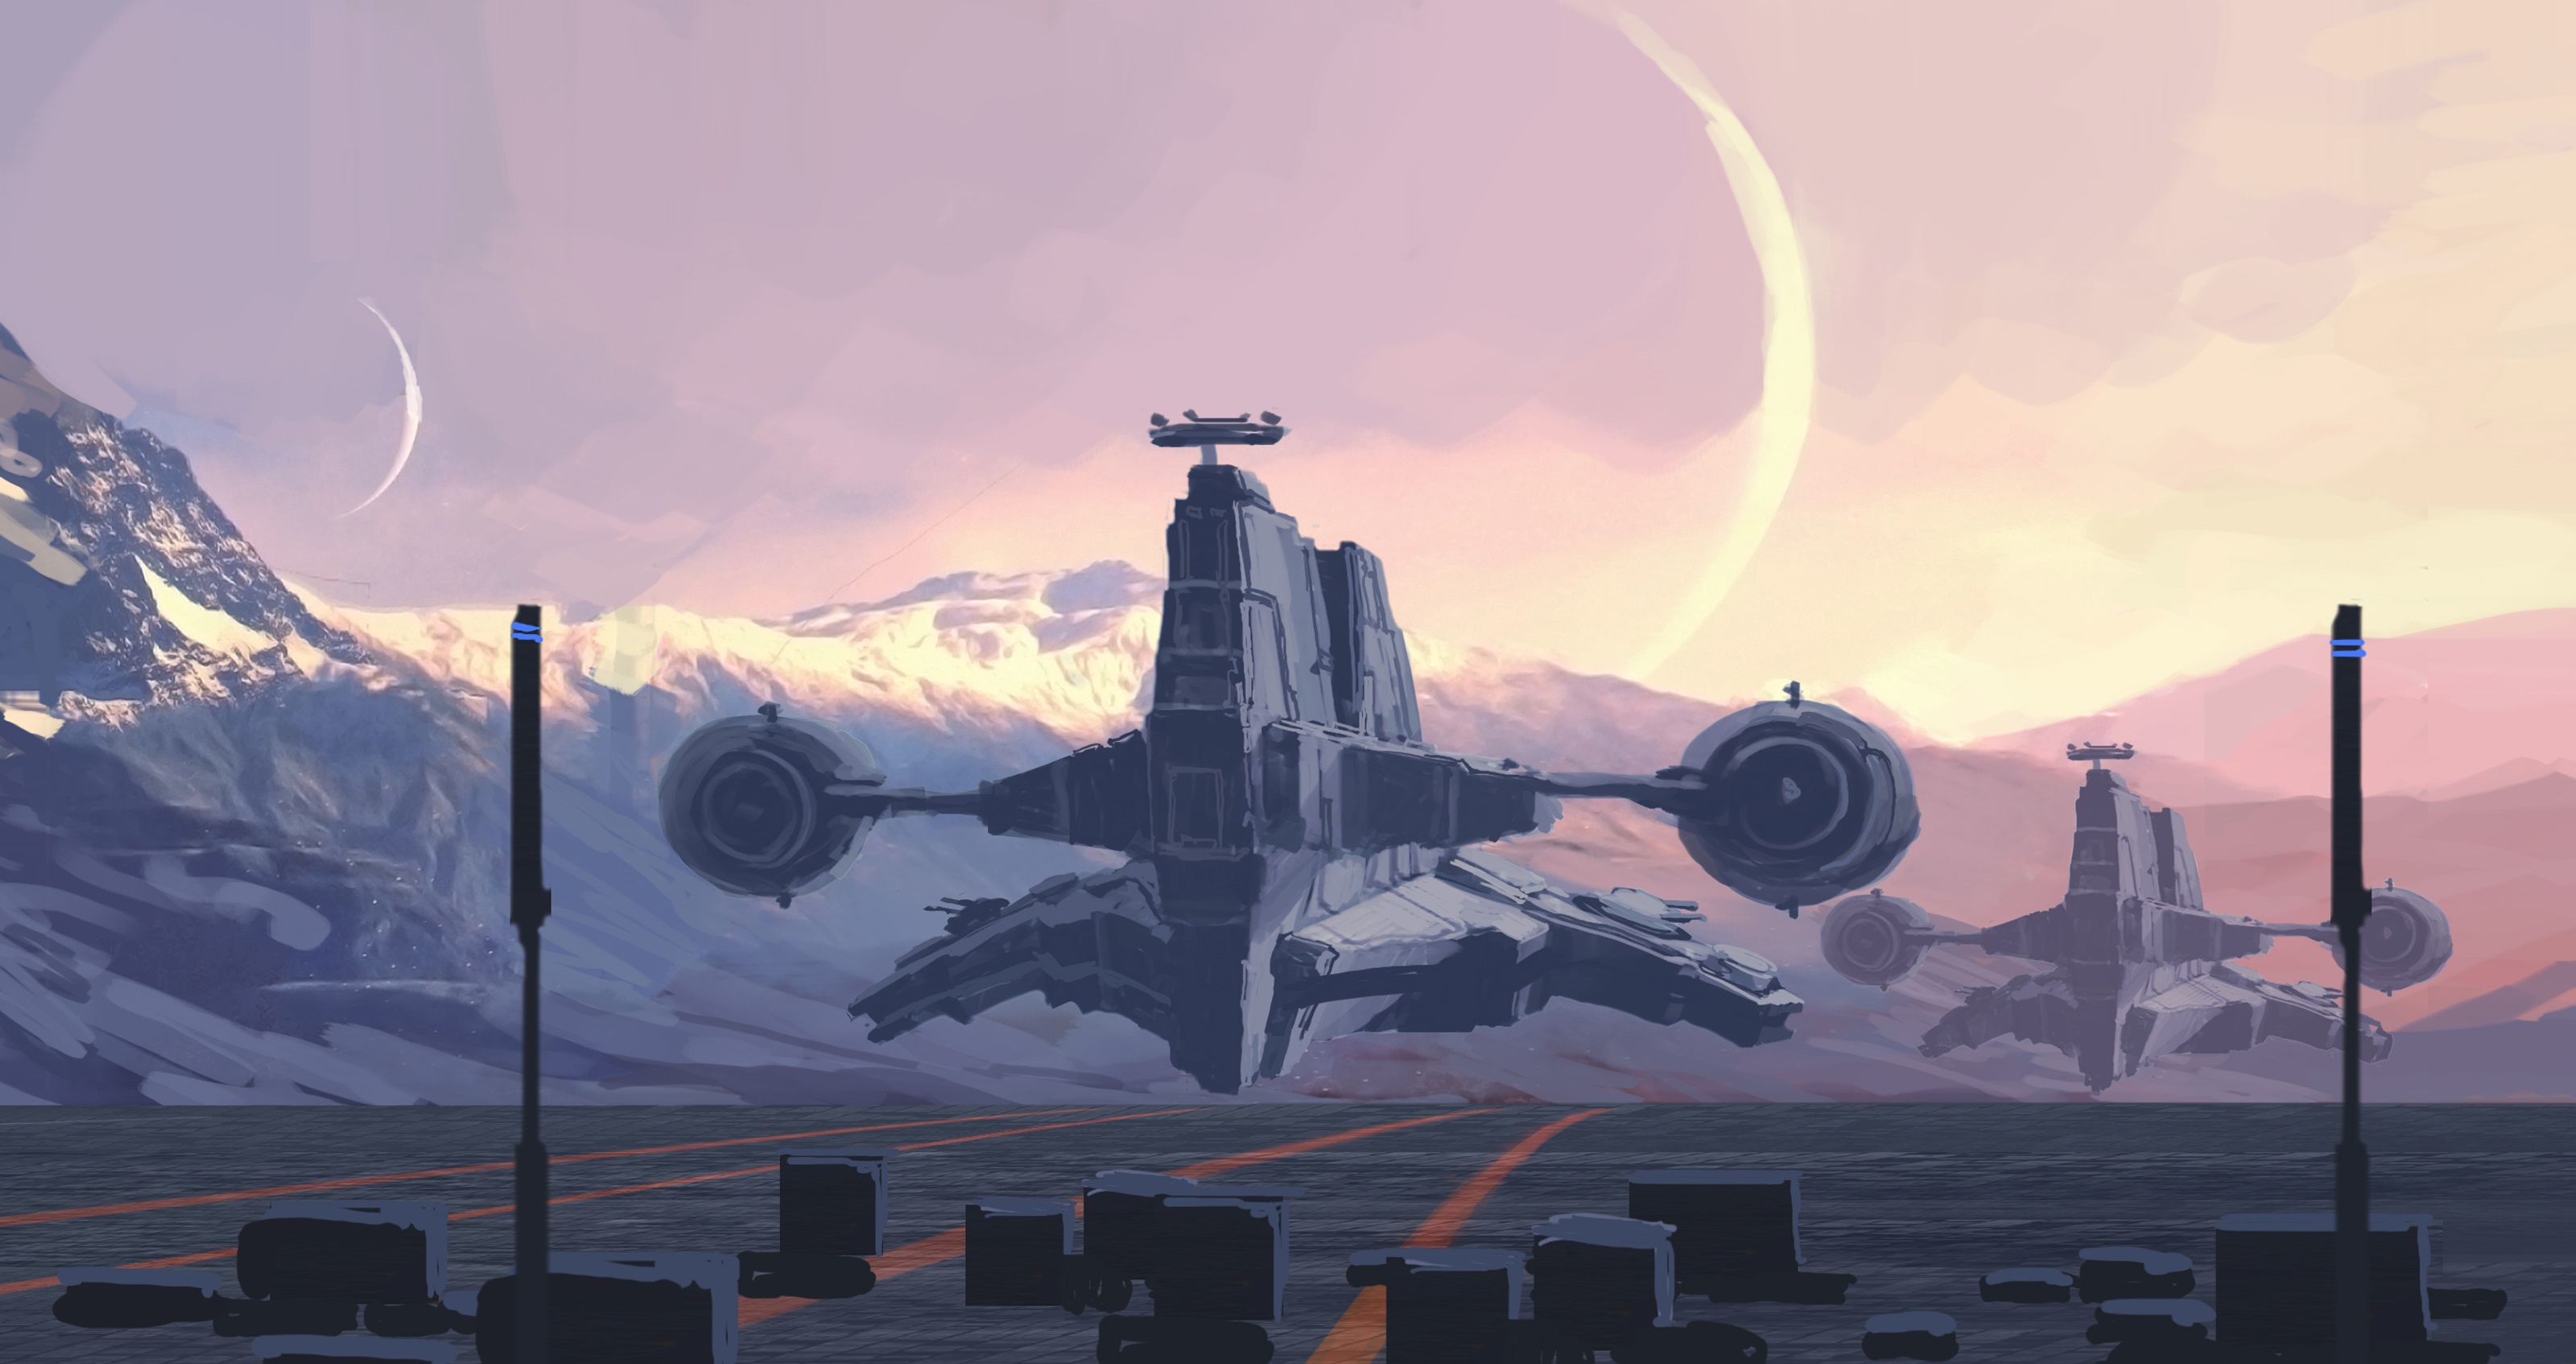 Science Fiction Spaceship Artwork Digital Art Sky Mountains Cyberpunk Futuristic Moon Sunset Morning 3200x1695